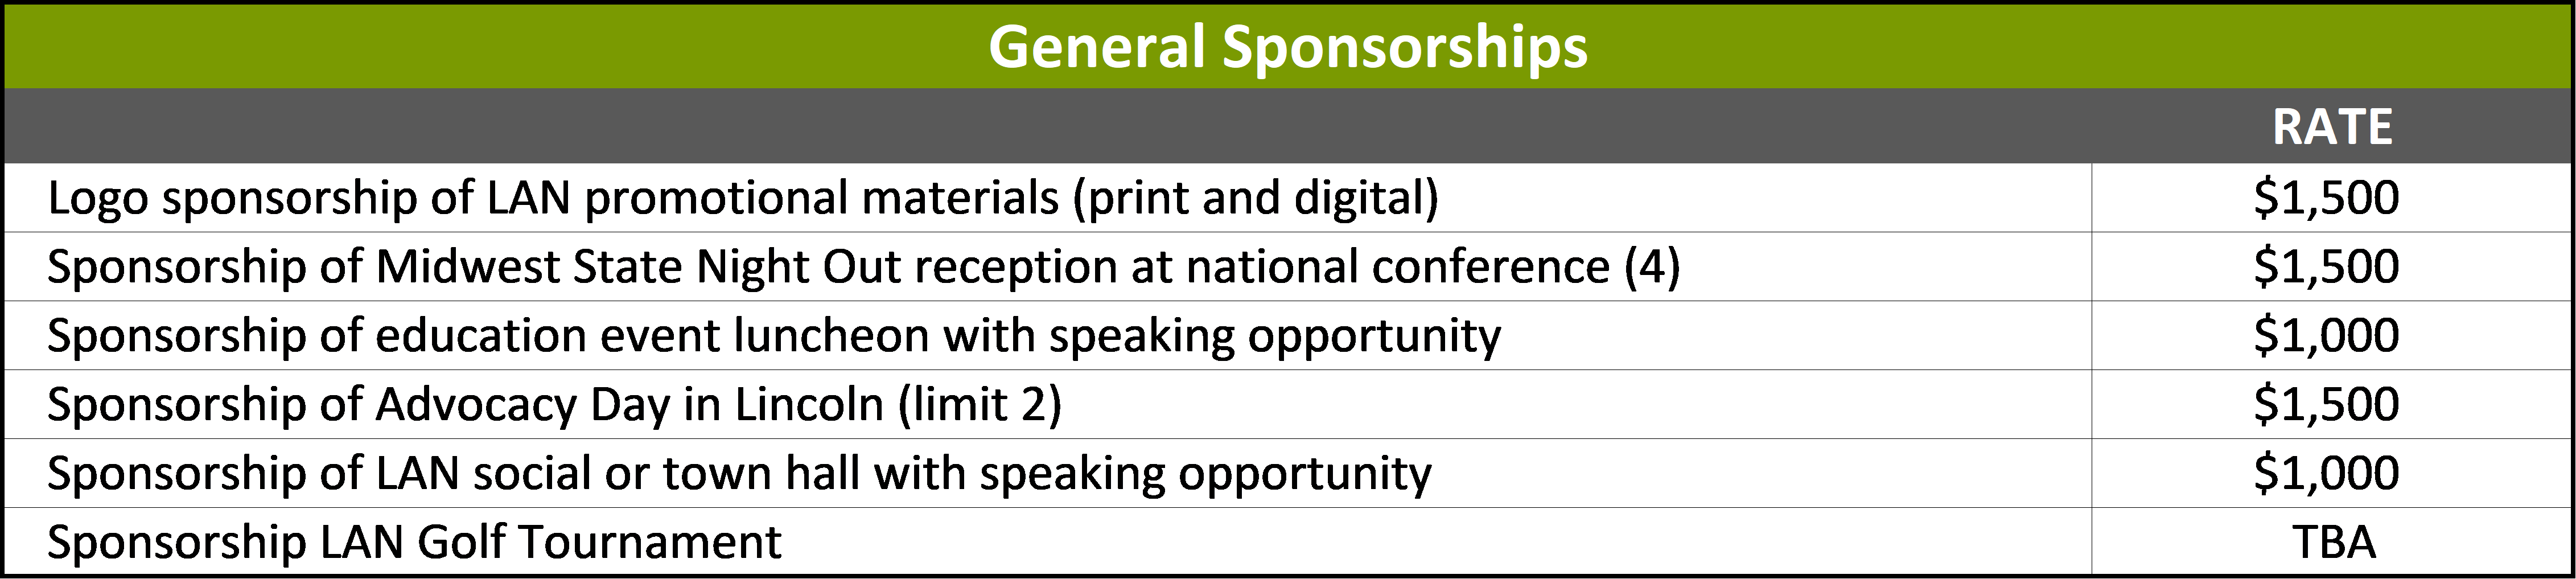 General sponsorships